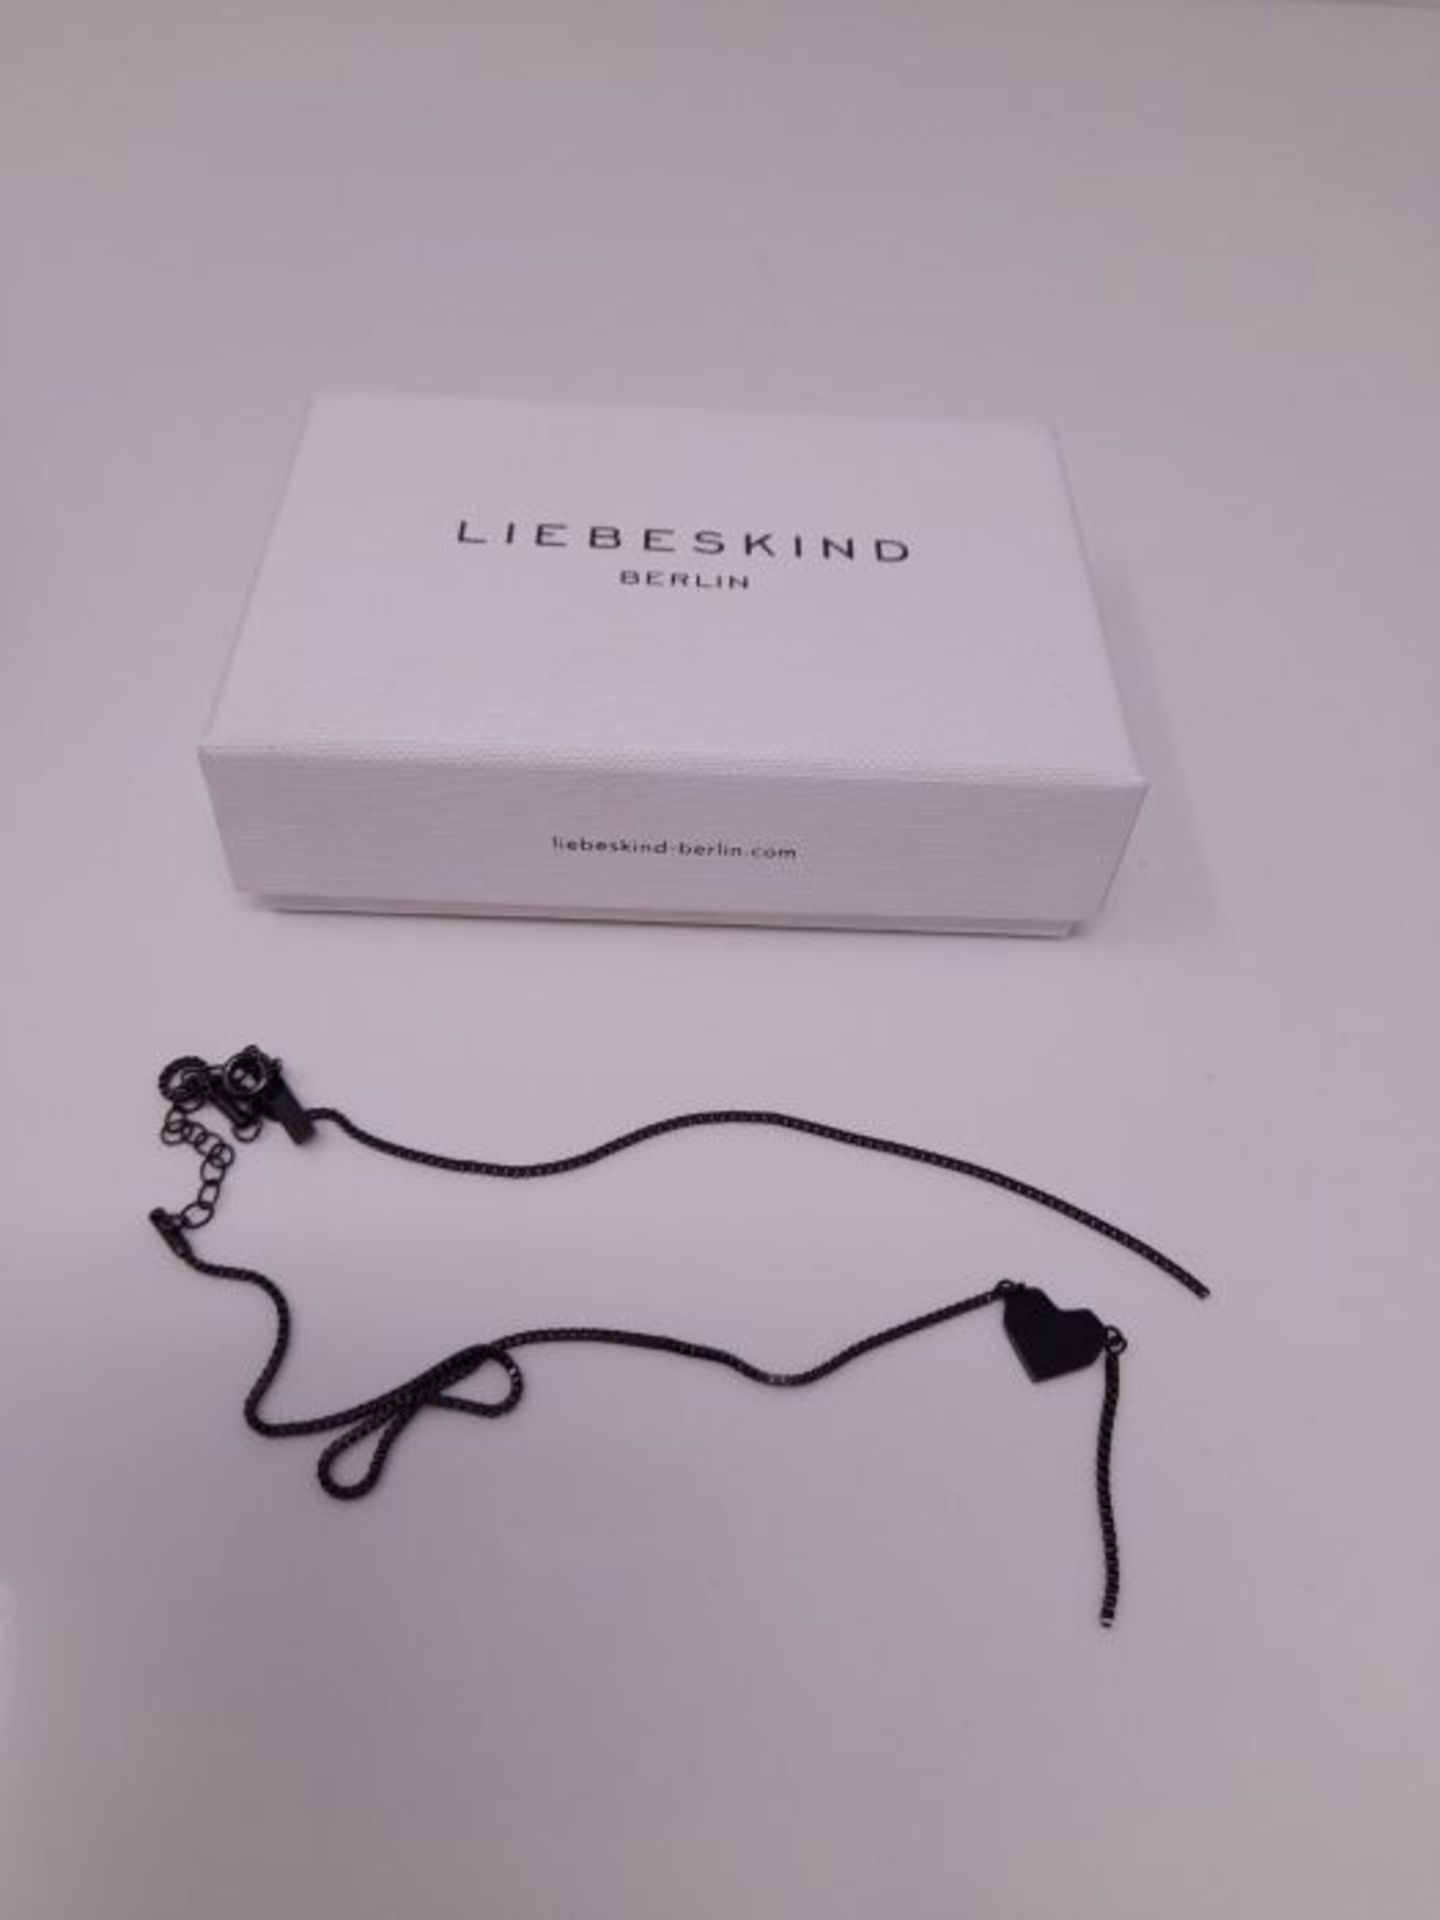 [CRACKED] Liebeskind Berlin LJ-0331-N-V 40 Women's Necklace Stainless Steel Black - Image 3 of 3